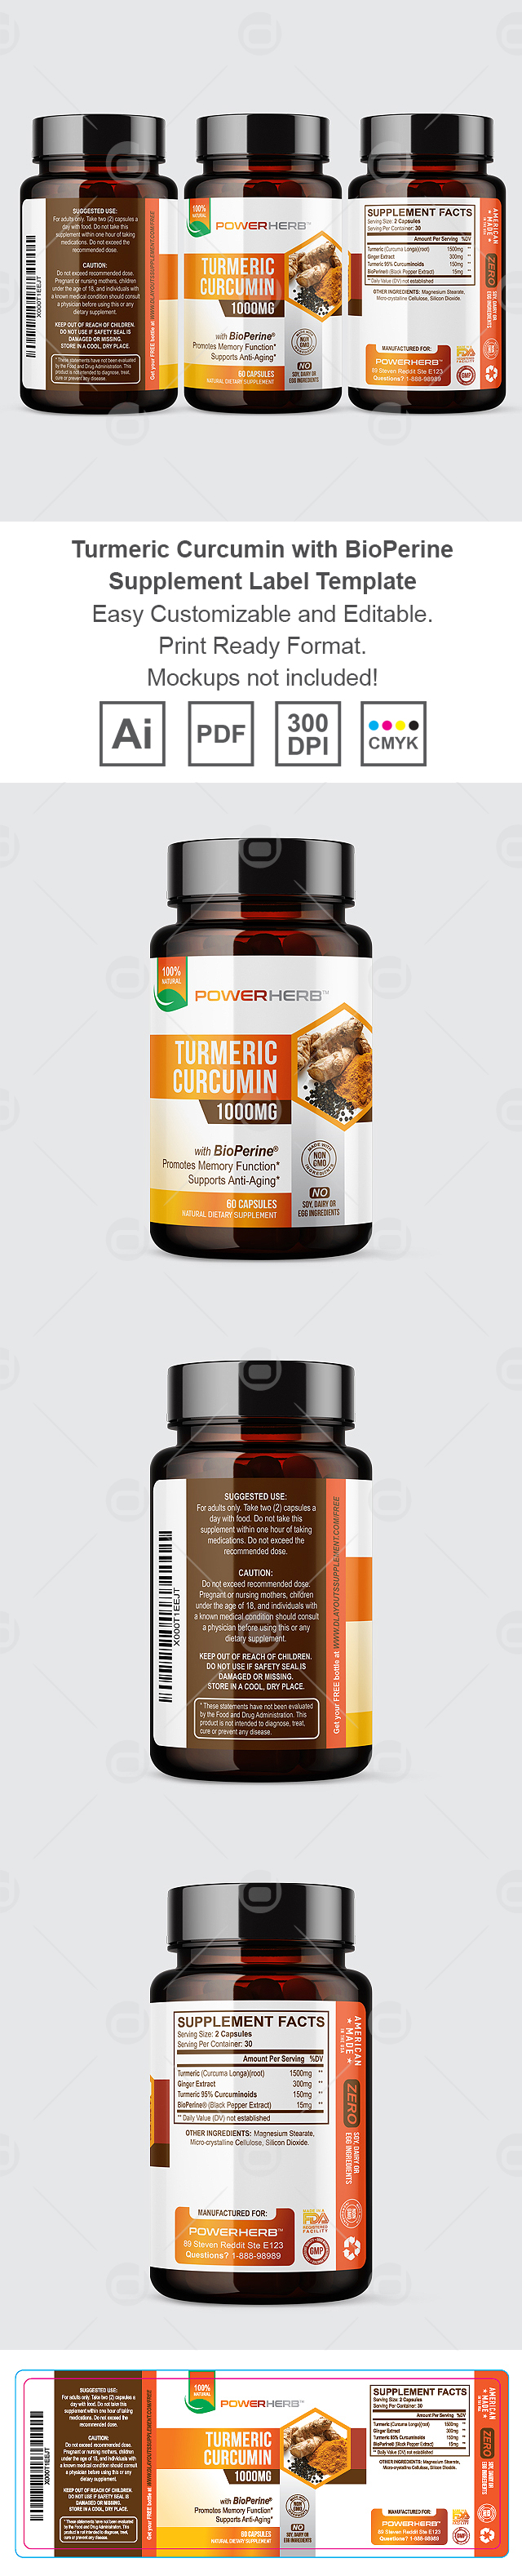 Turmeric Curcumin with BioPerine Supplement Label Template